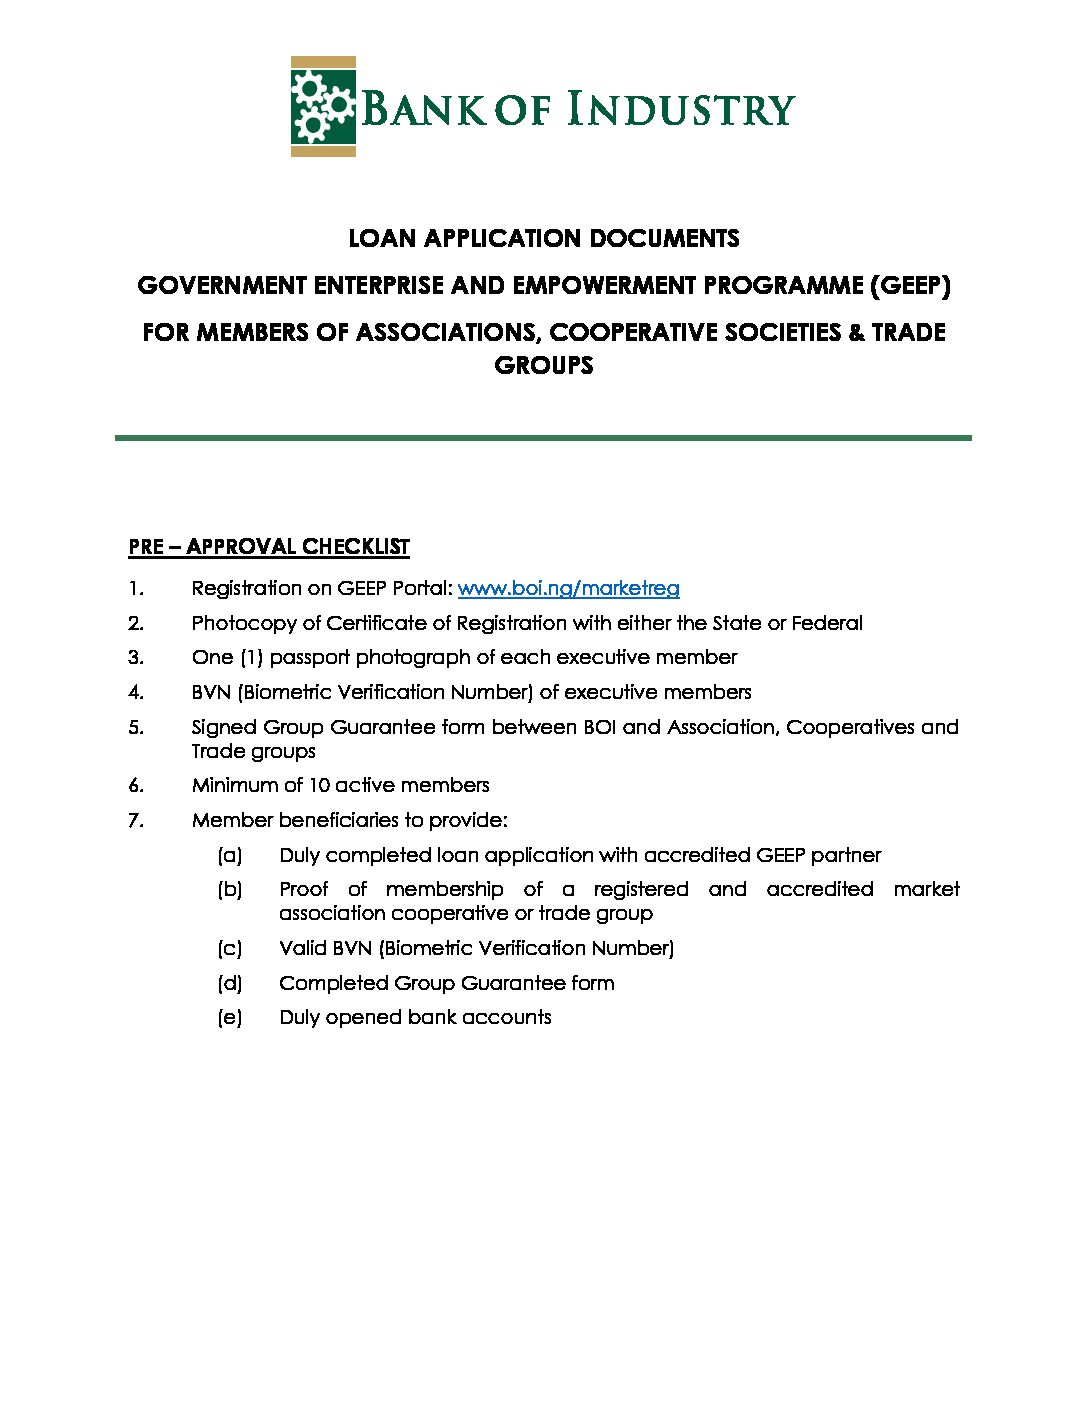 LOAN APPLICATION CHECKLIST GEEP 1 pdf Nigerian navy past questions